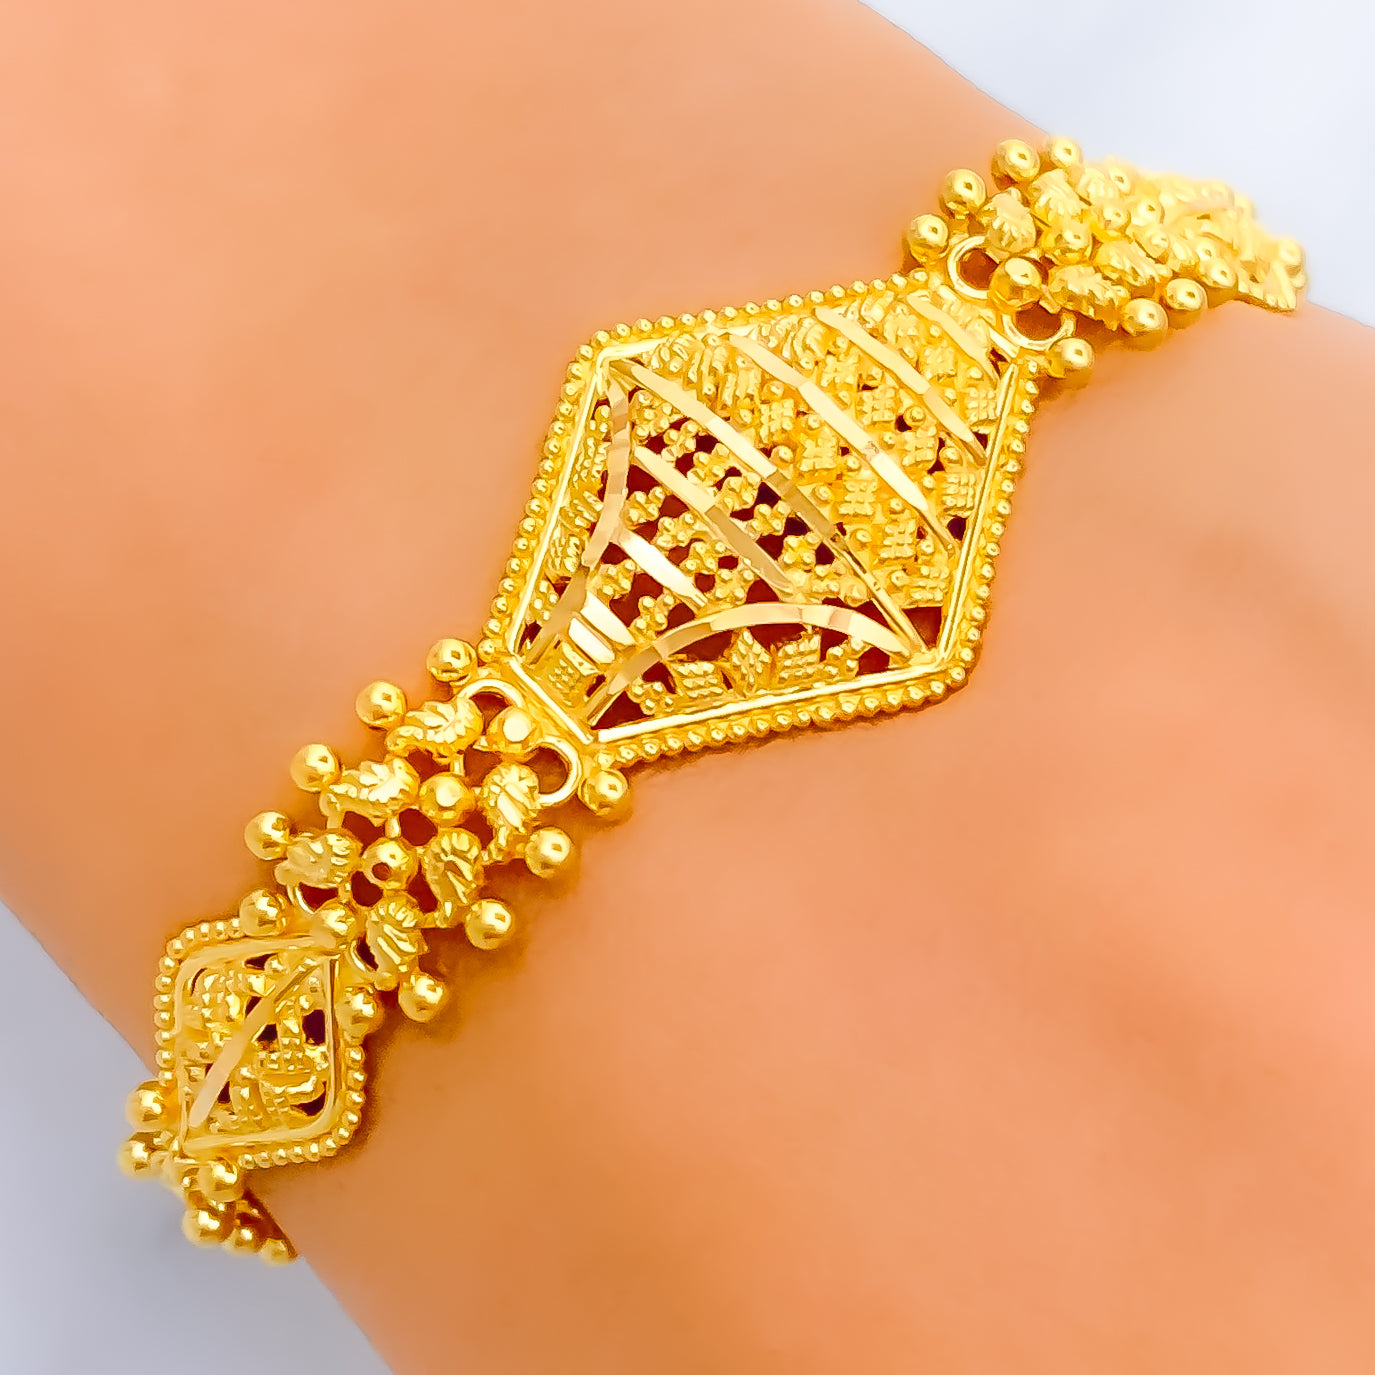 SNJ Gold Bracelet For Women at Rs 4500 in Rajkot | ID: 22999654148